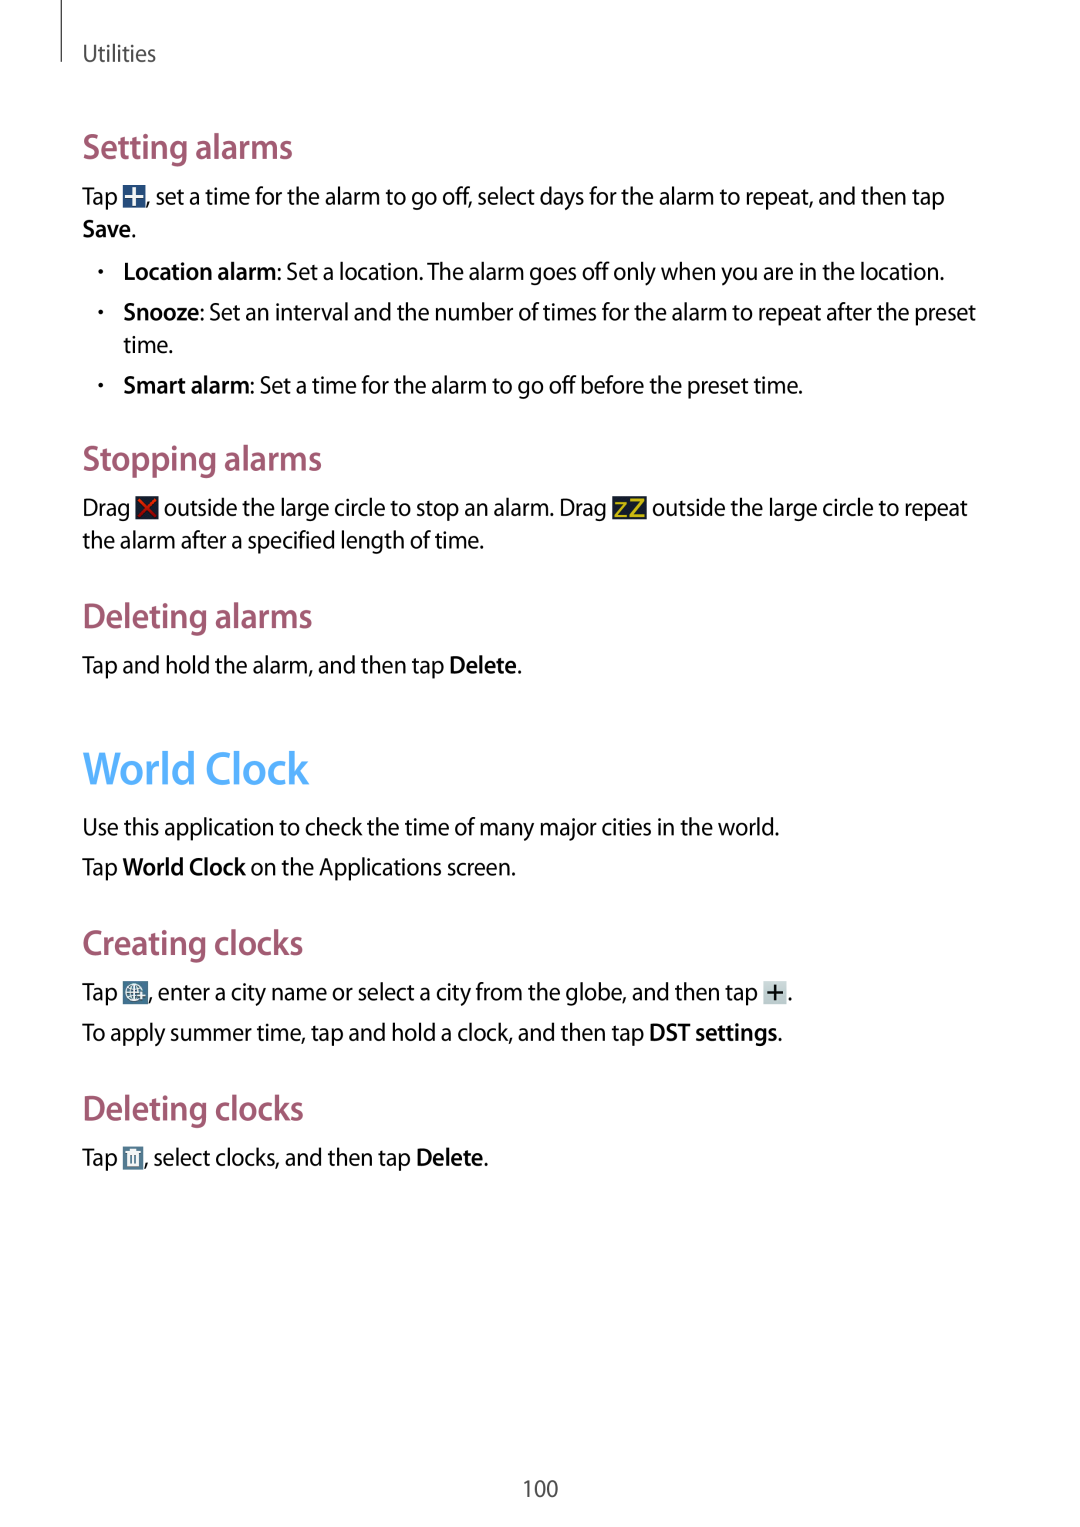 Samsung SM-T3150MKANEE World Clock, Setting alarms, Stopping alarms, Deleting alarms, Creating clocks, Deleting clocks 